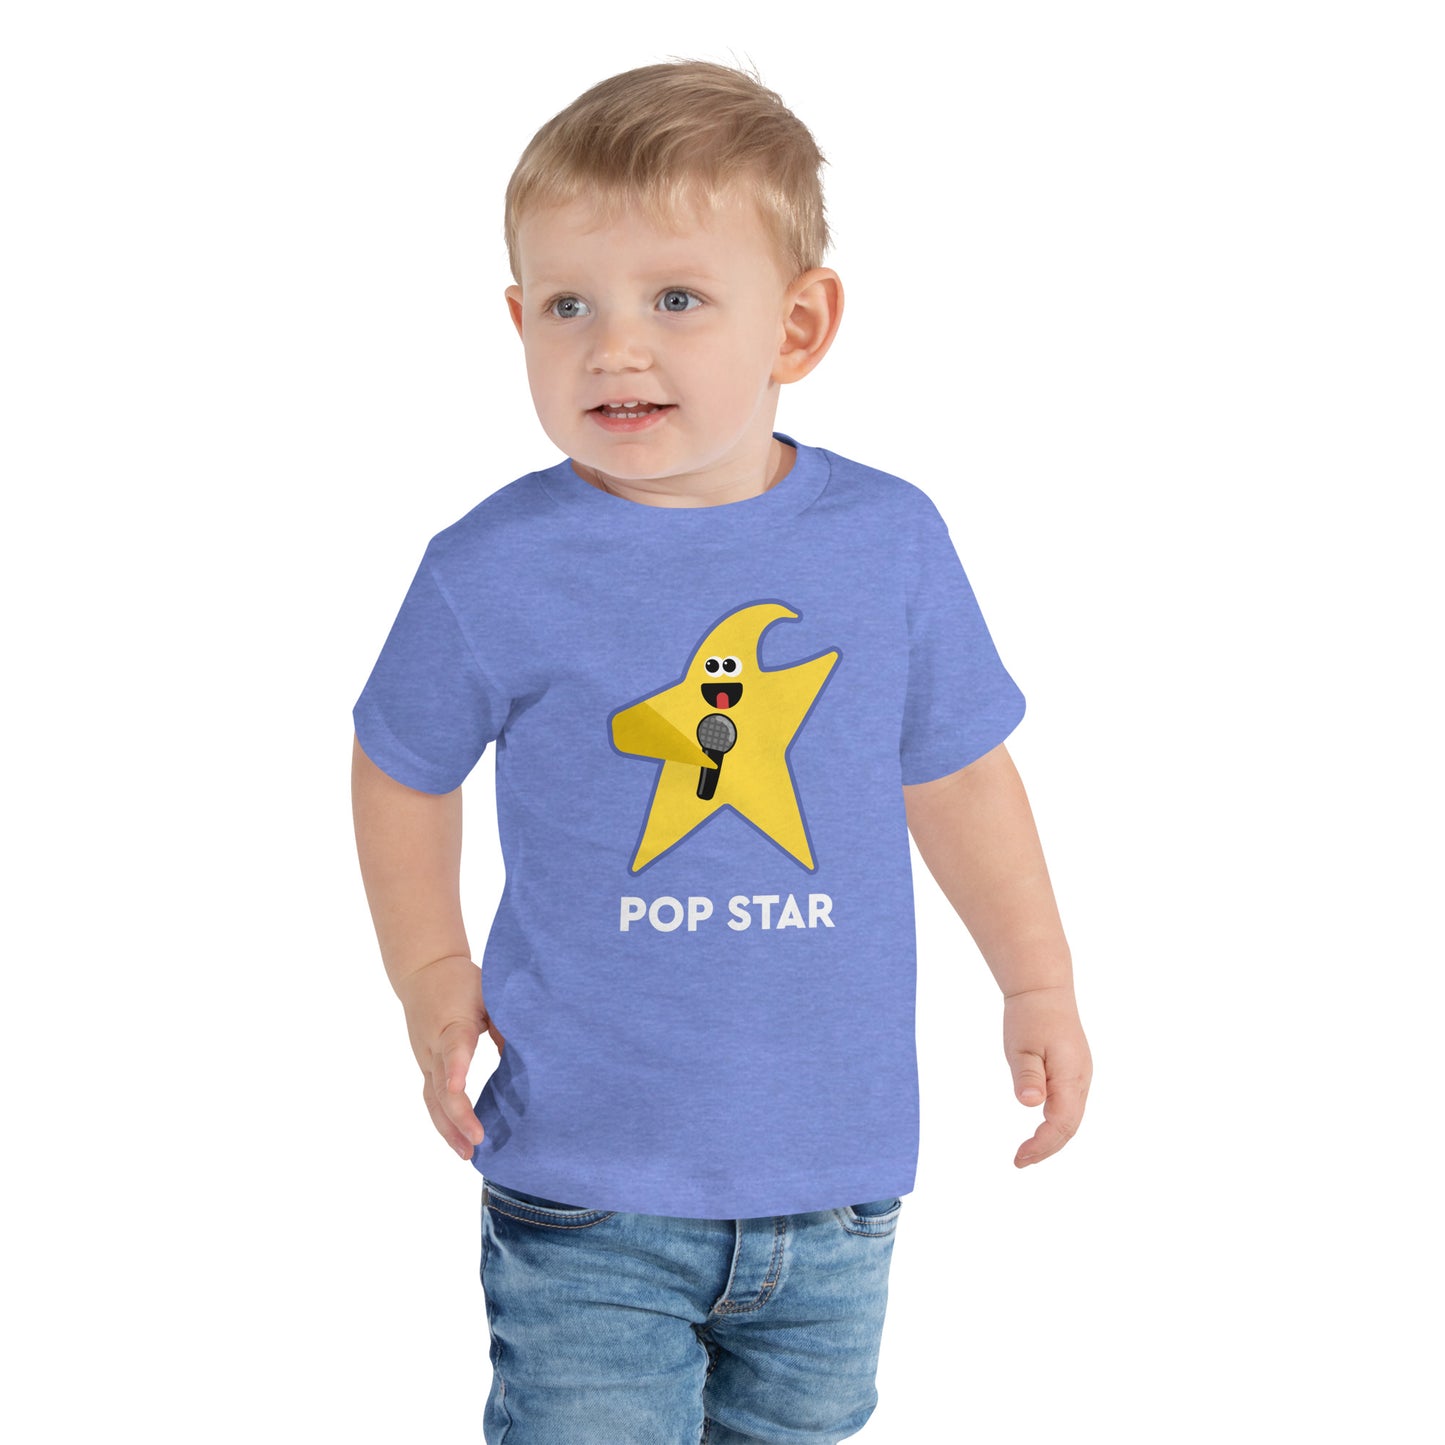 Toddler - Pop Star - Short Sleeve Tee